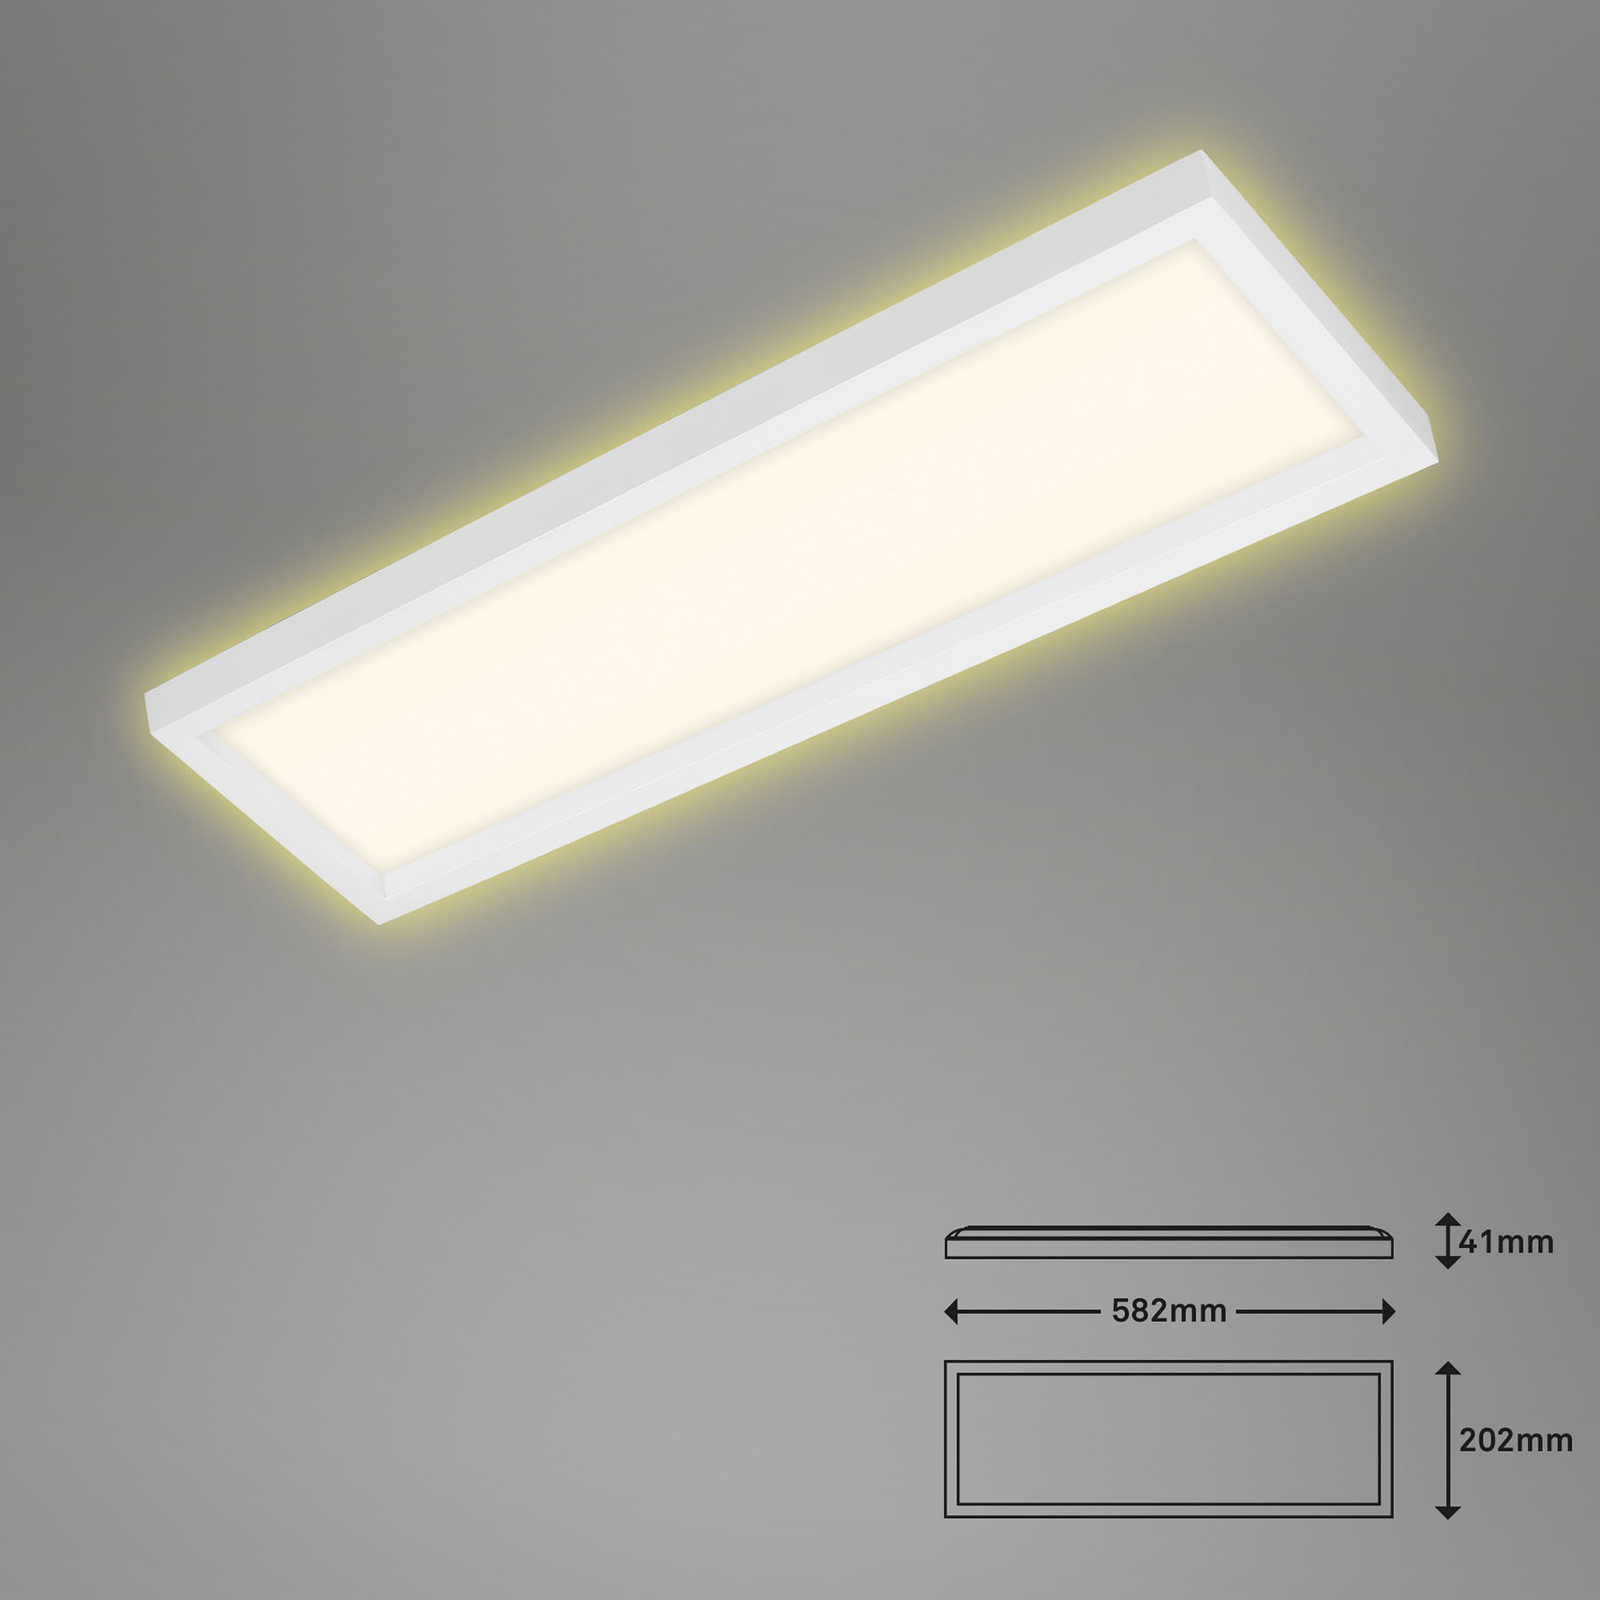 Lampa sufitowa LED 7365, 58 x 20 cm, biała